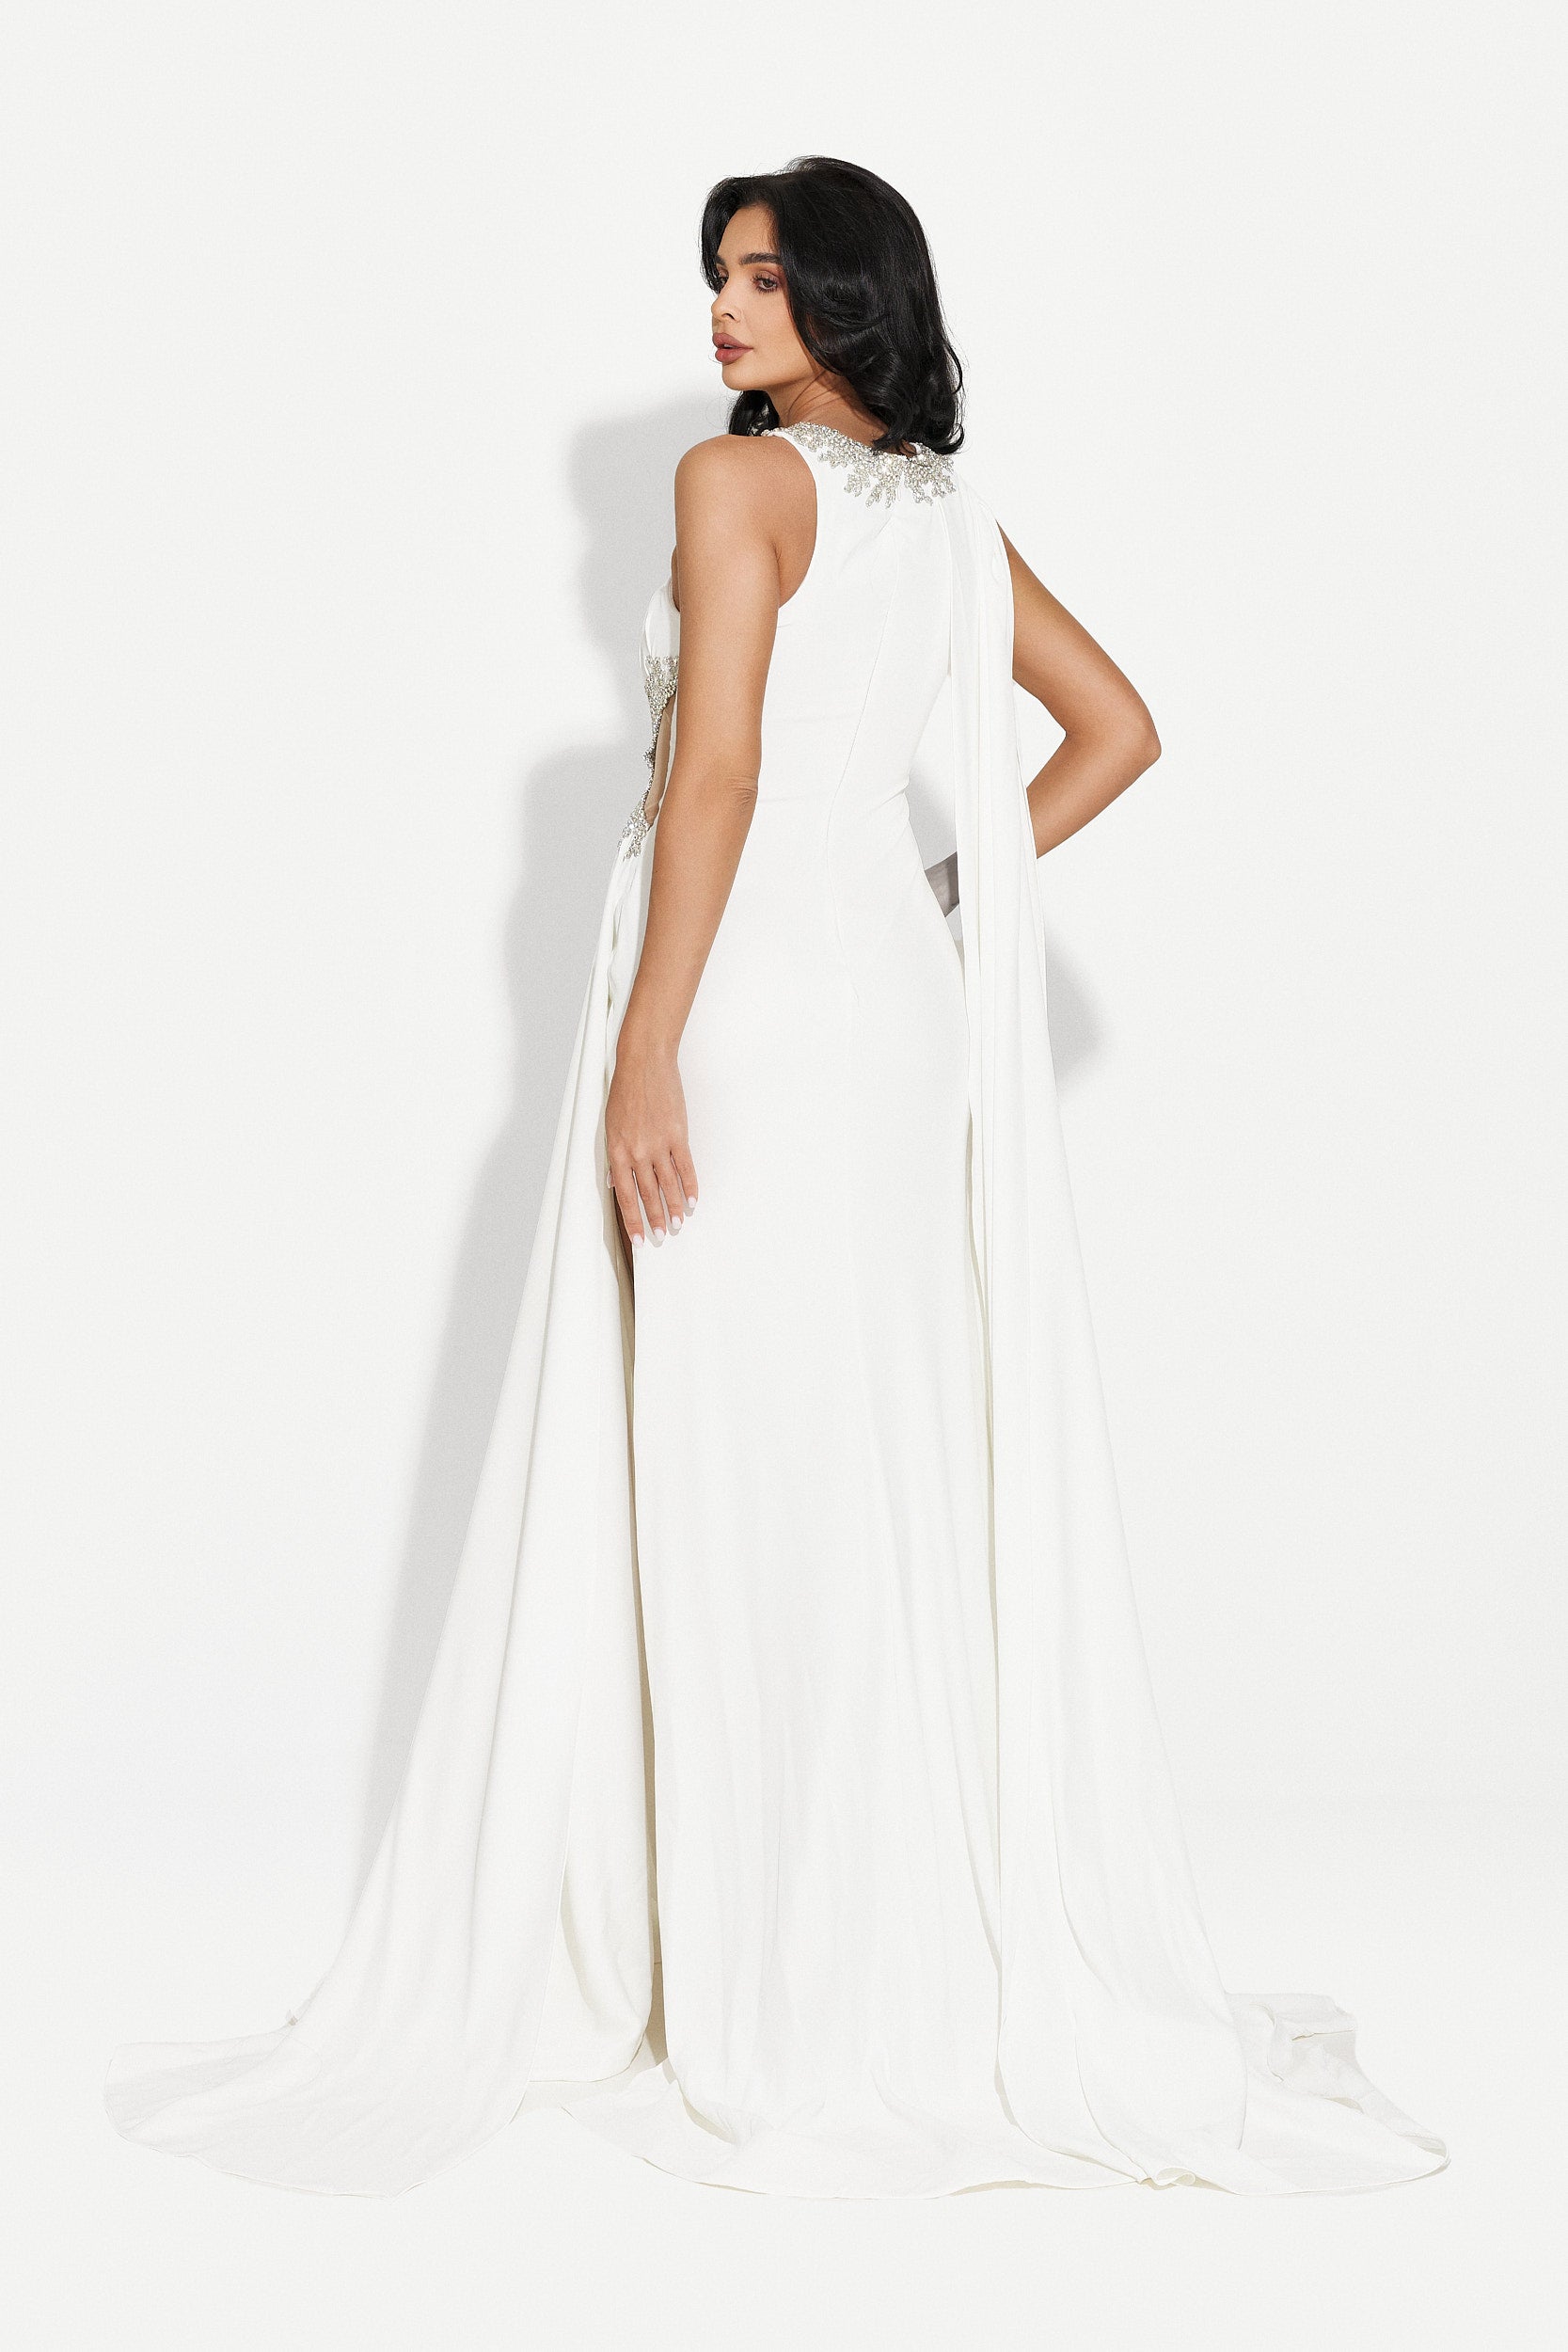 Alexea Bogas hosszú fehér női ruha